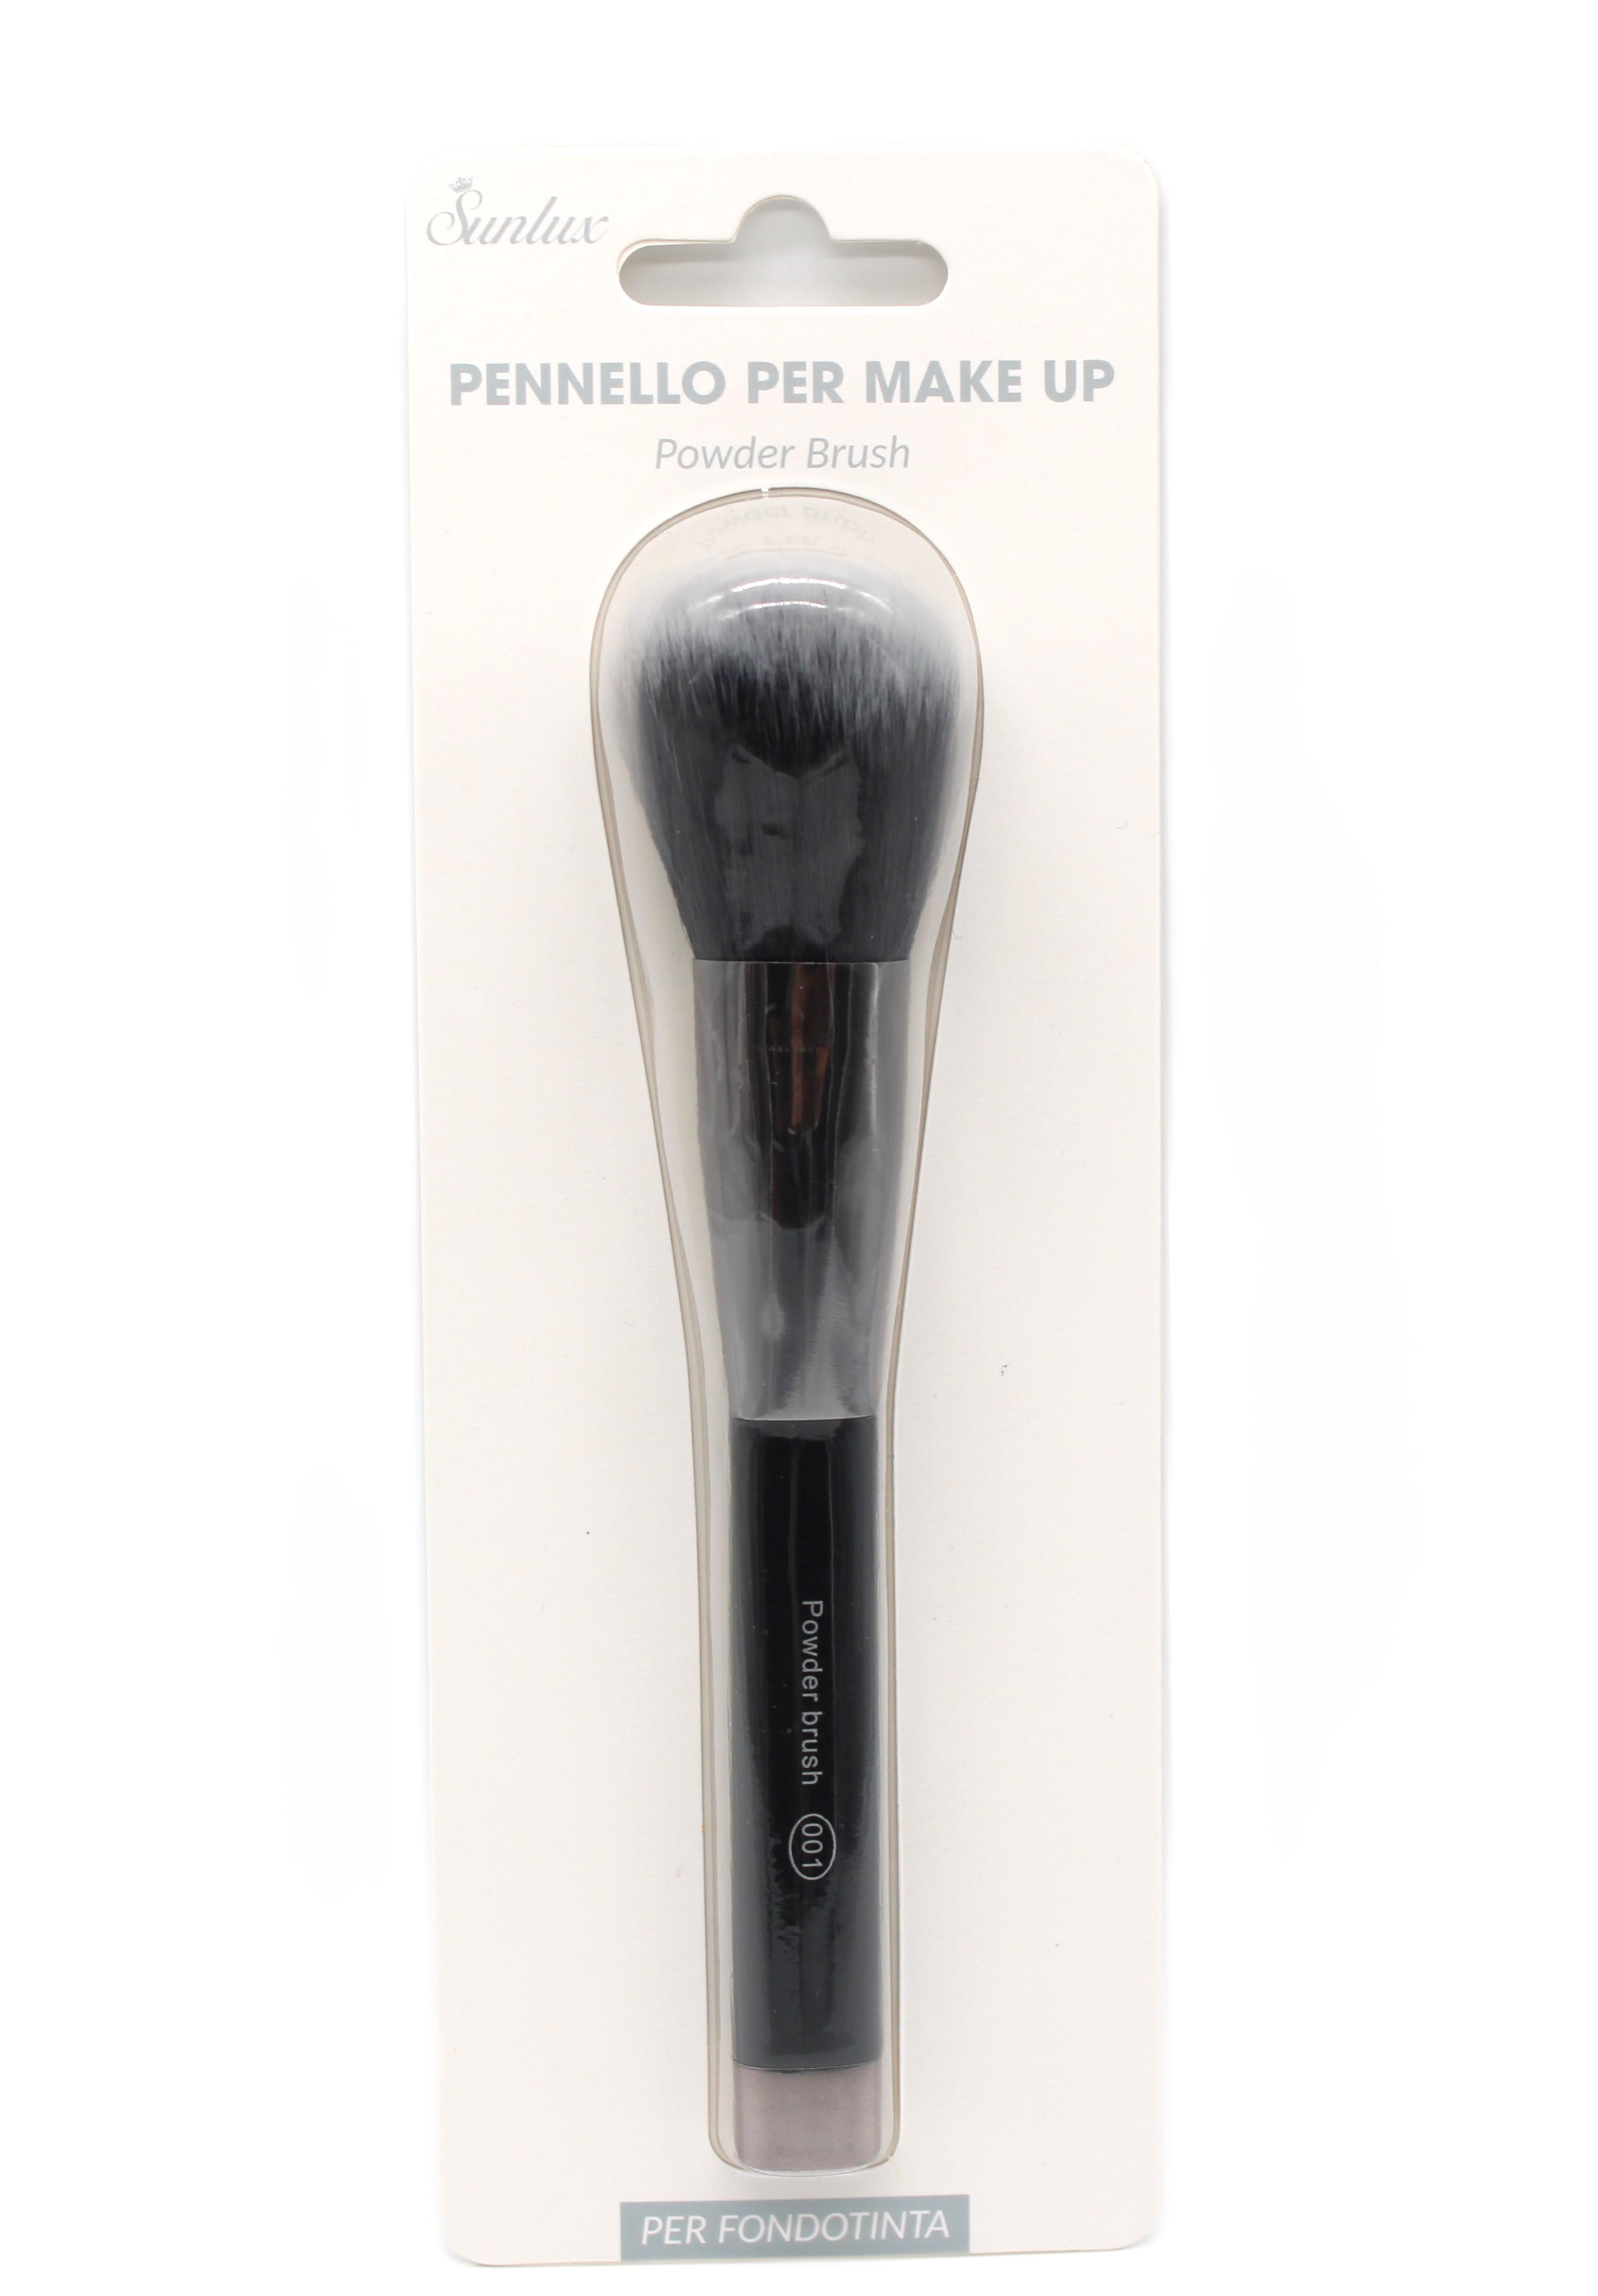 Pennello make up 001 powder brush